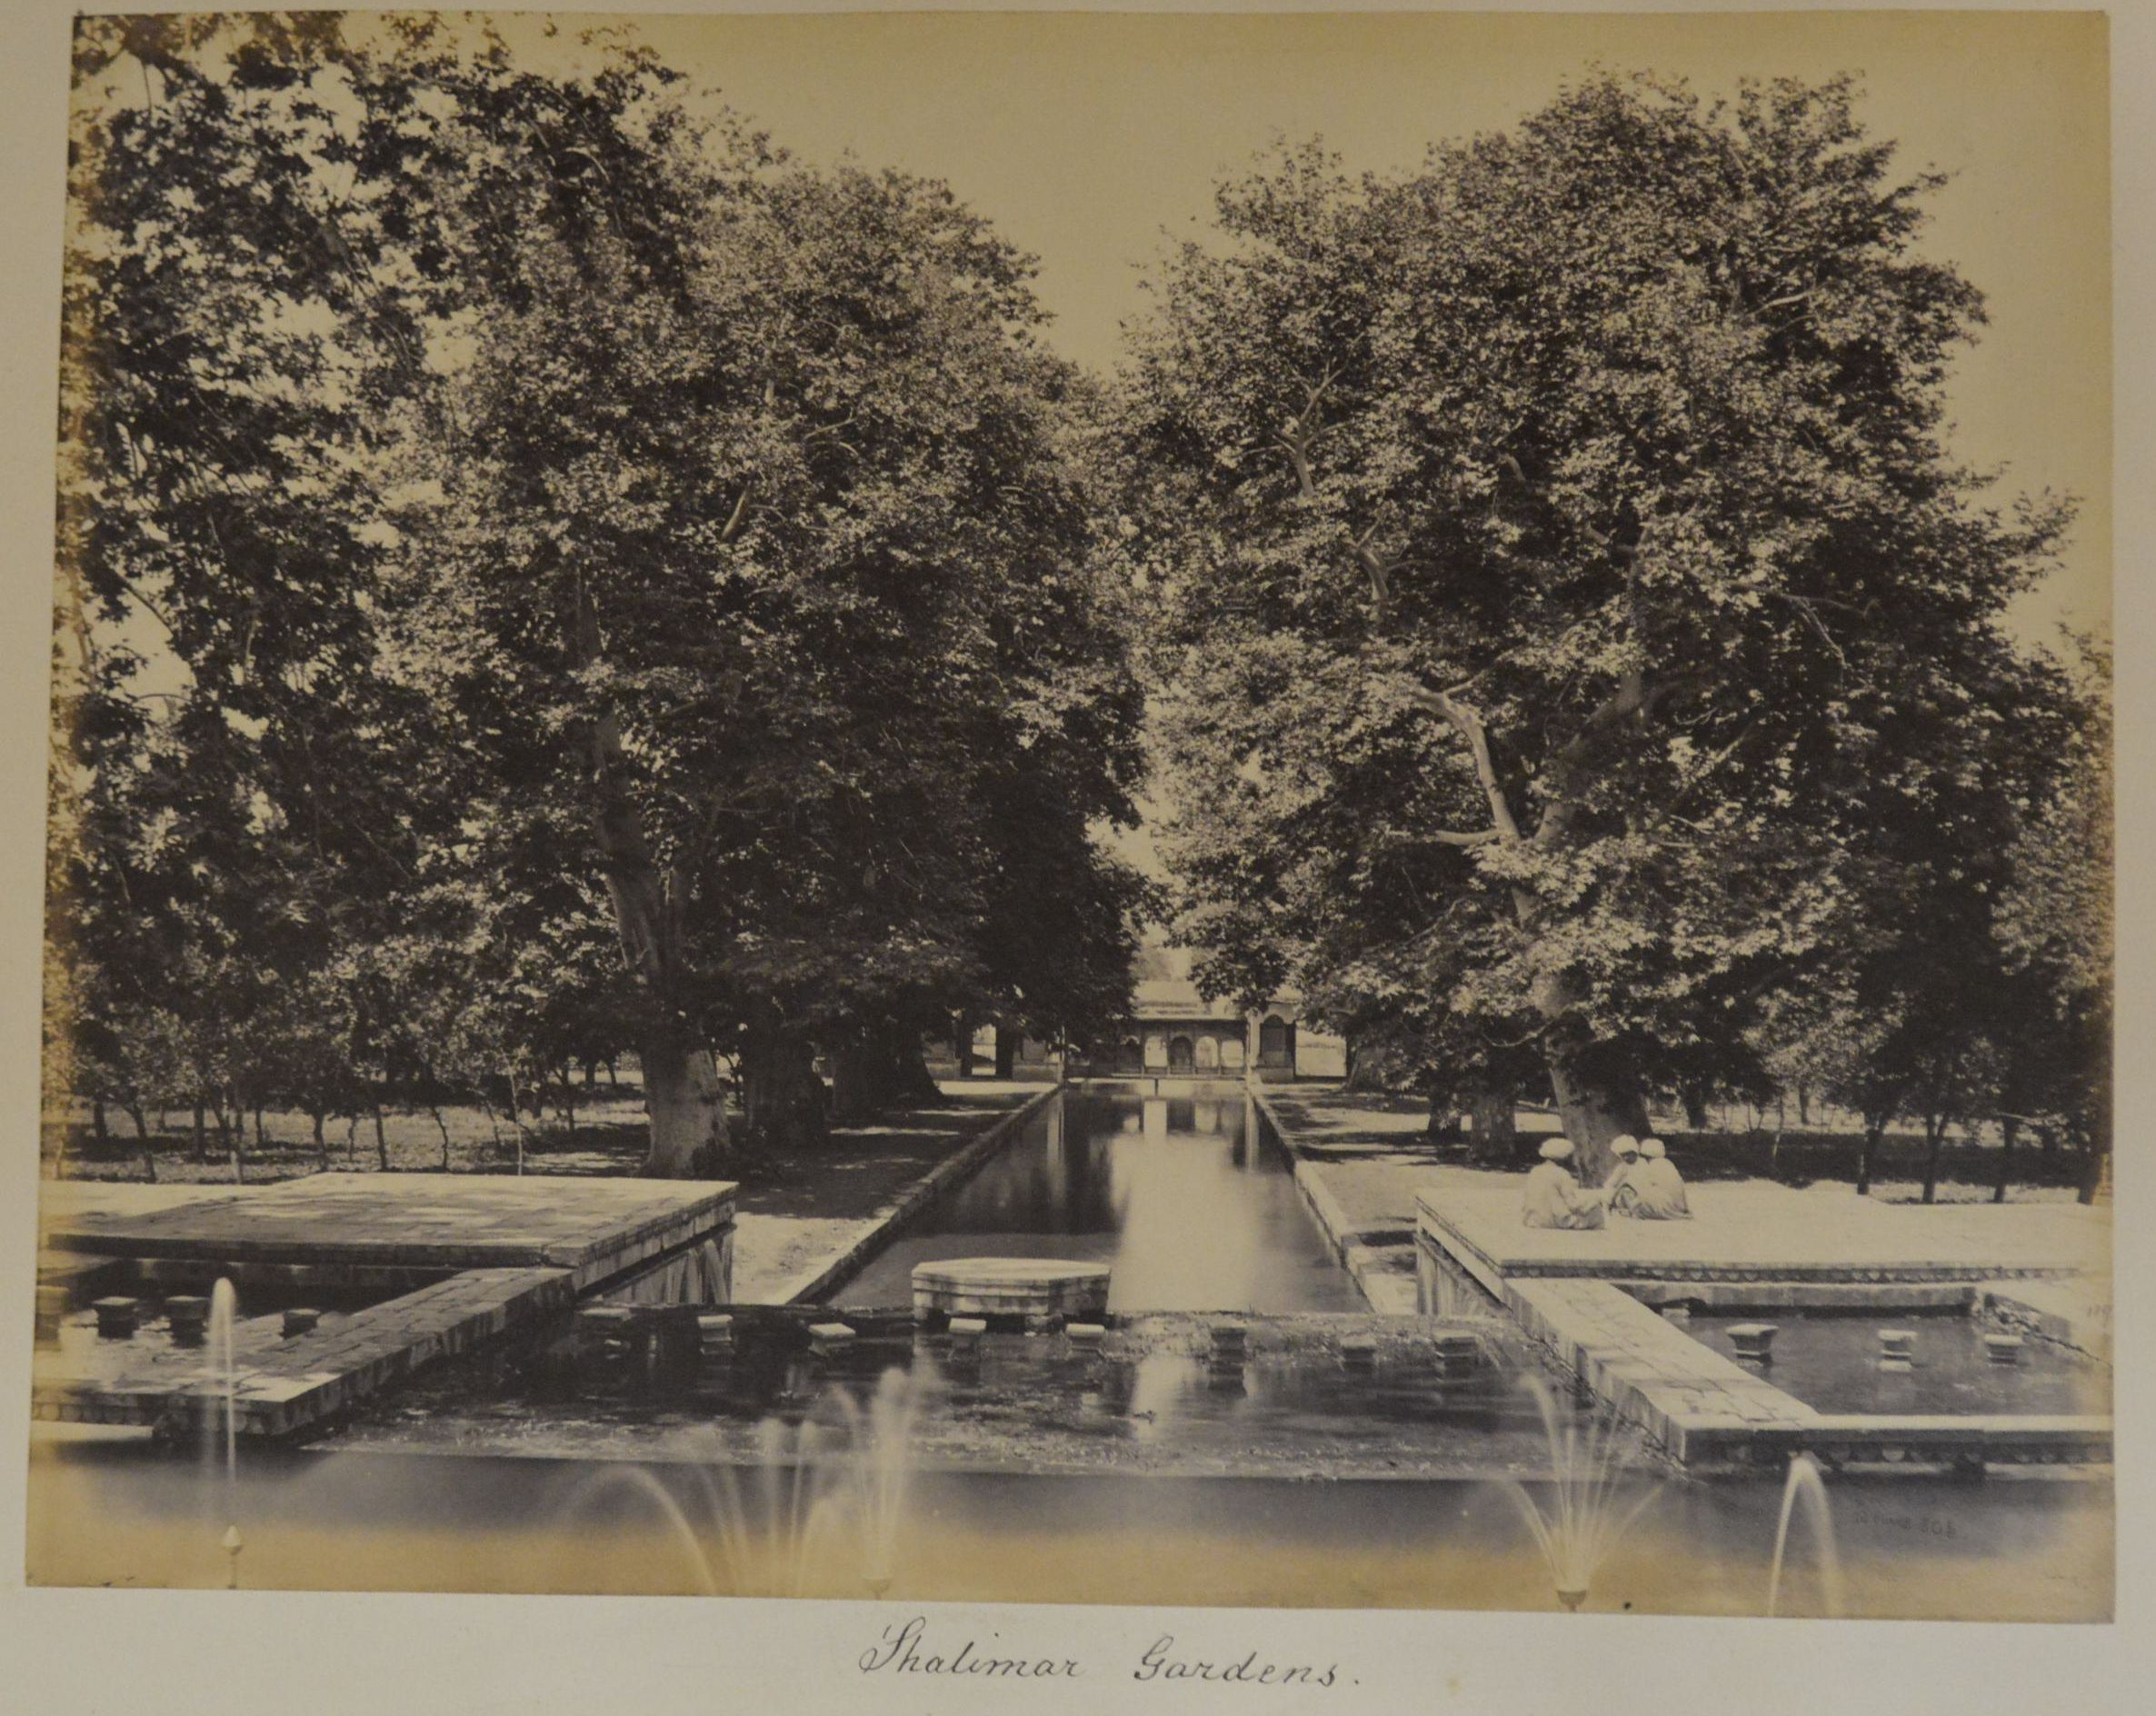 *Bourne (Samuel, 1834-1912). Pathans, Peshawar Valley, India, 1860s, albumen print photograph, - Image 4 of 8